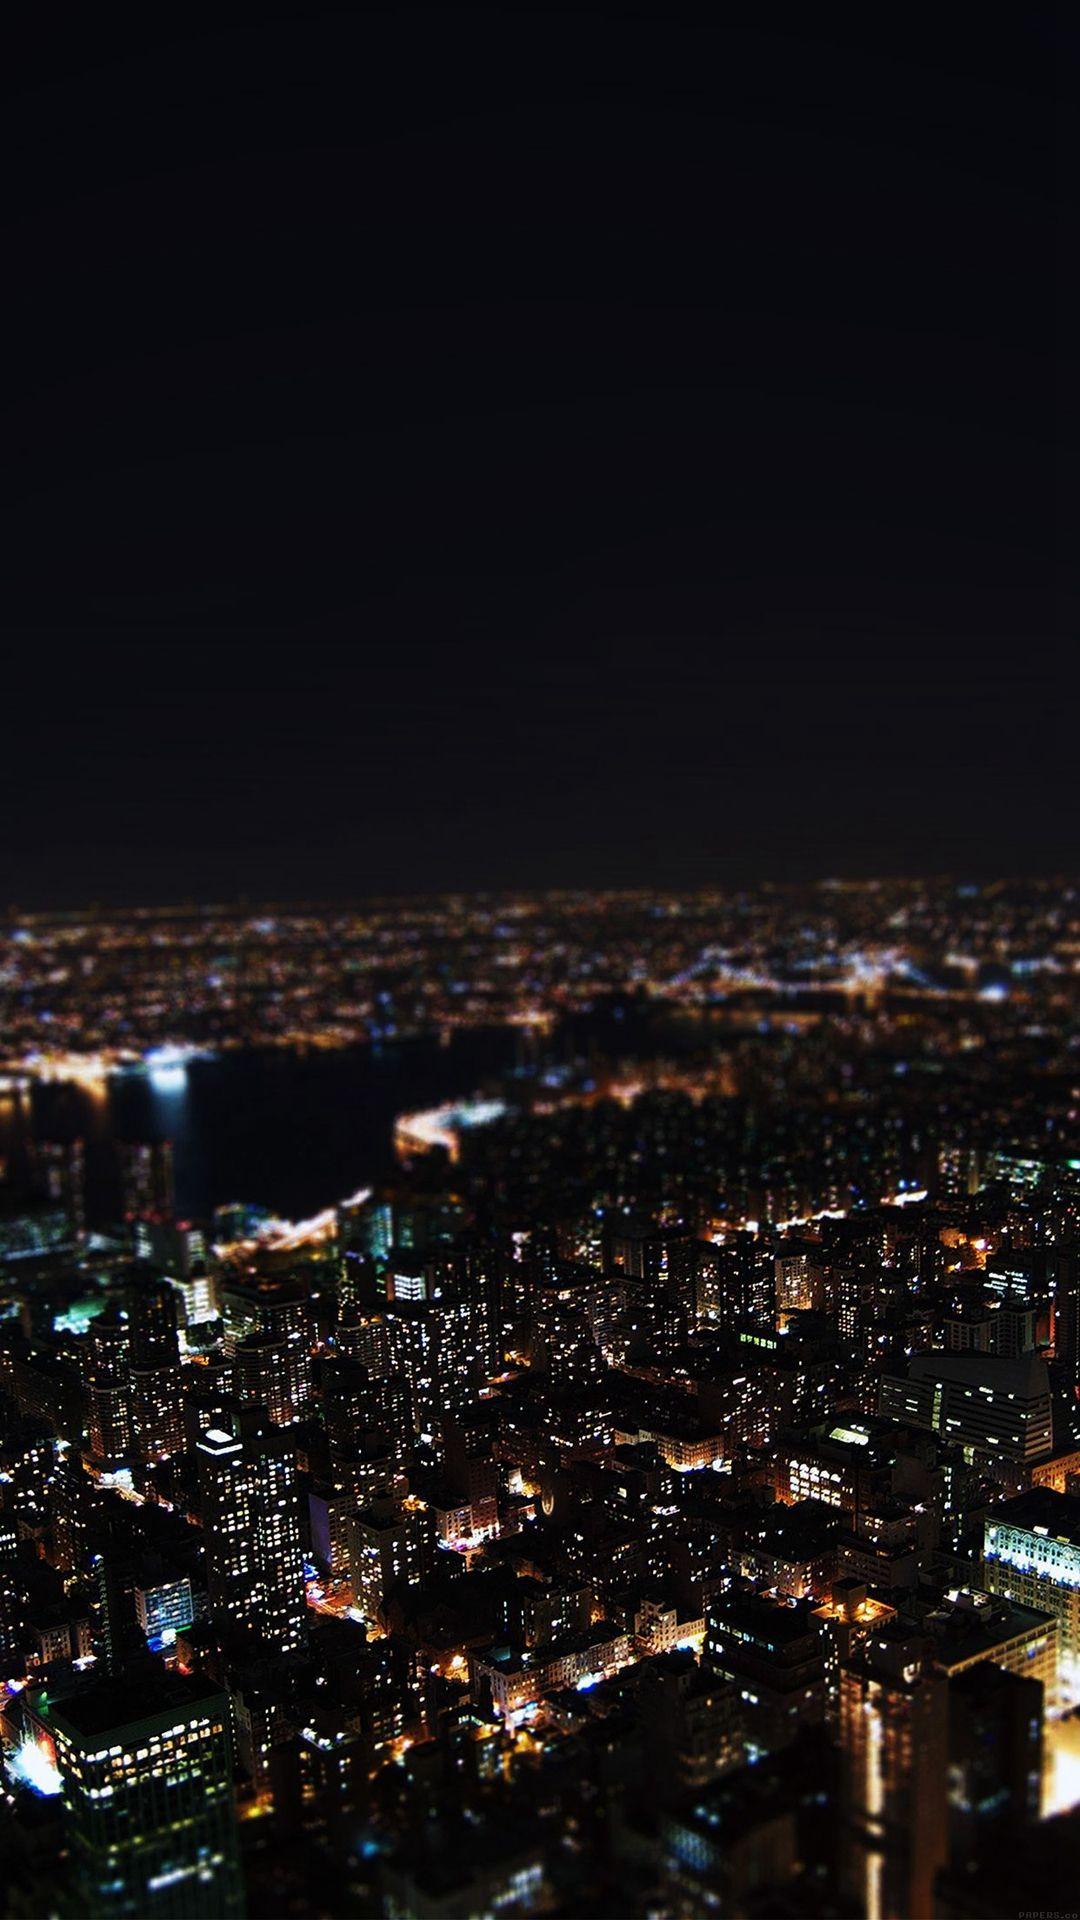 Dark Night City Building Skyview iPhone 6 wallpaper. City wallpaper, Night landscape, City lights wallpaper